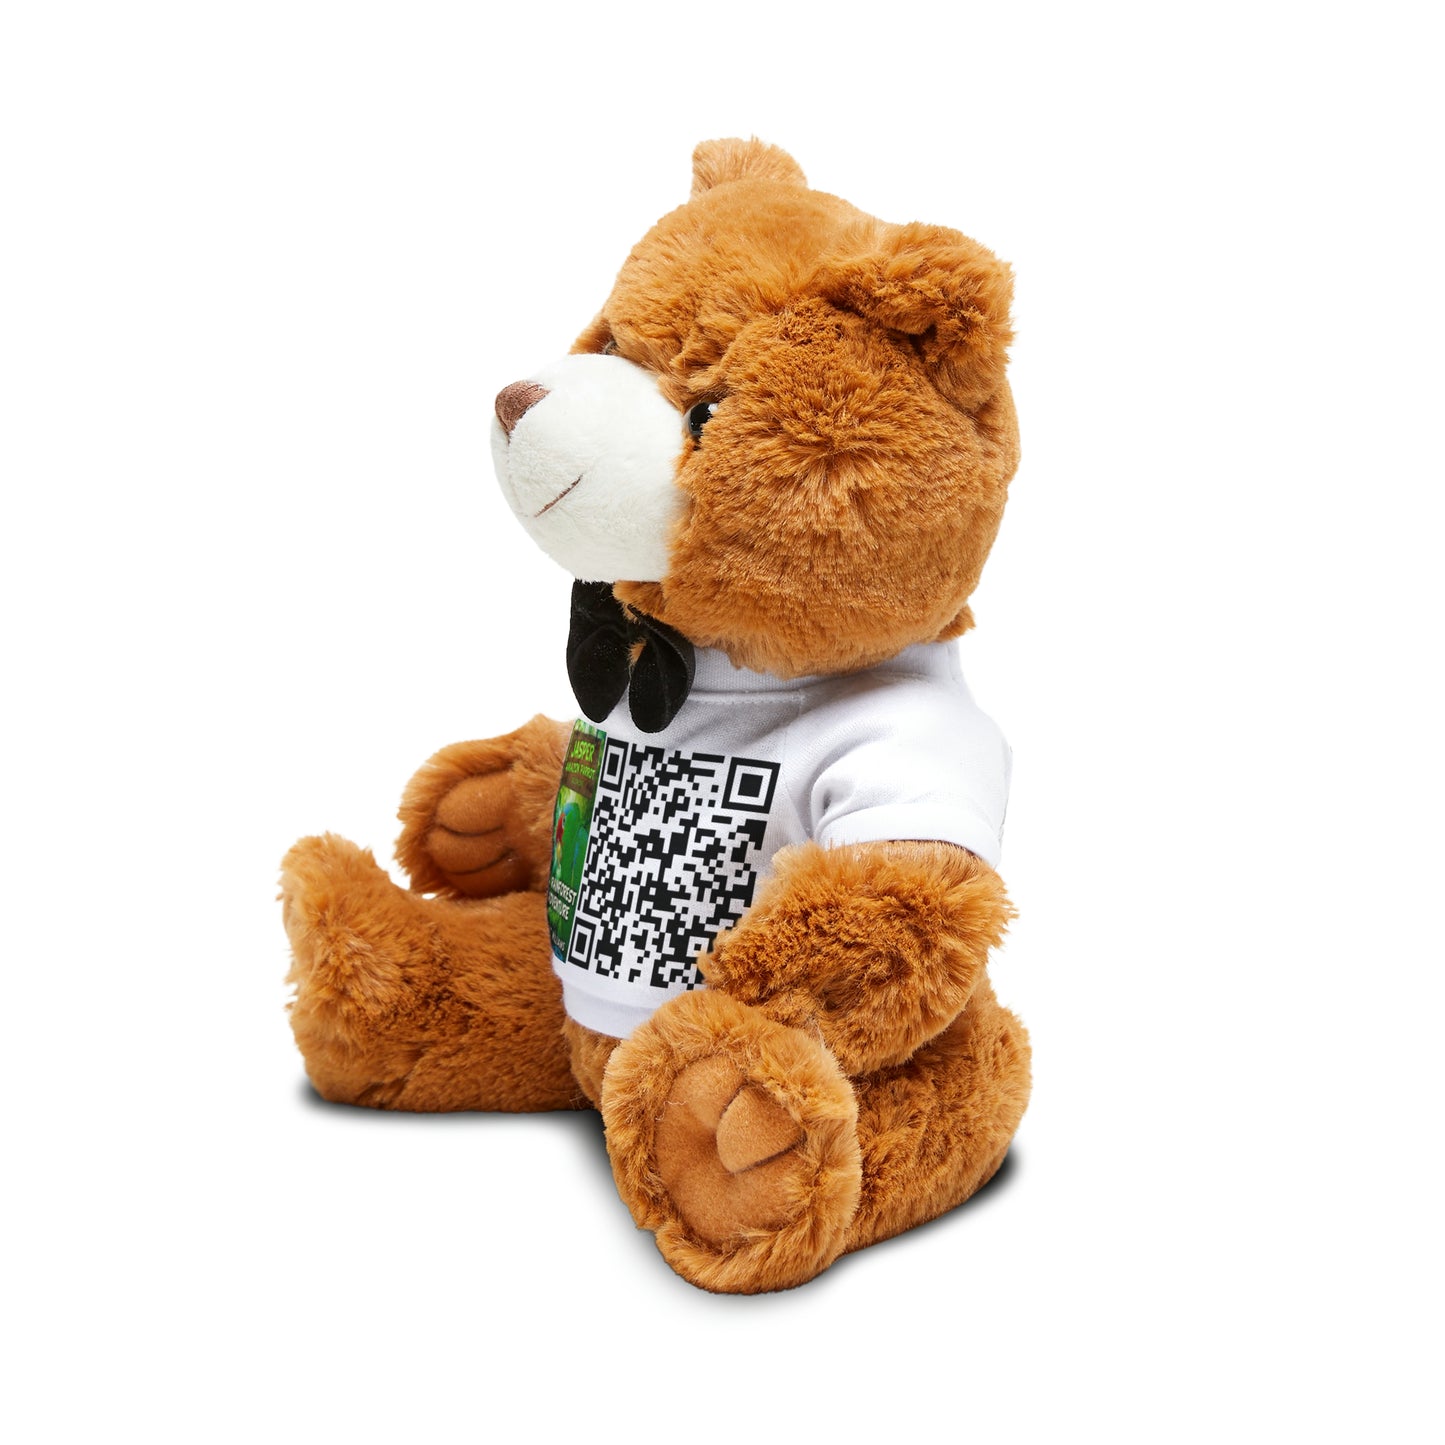 A Rainforest Adventure - Teddy Bear